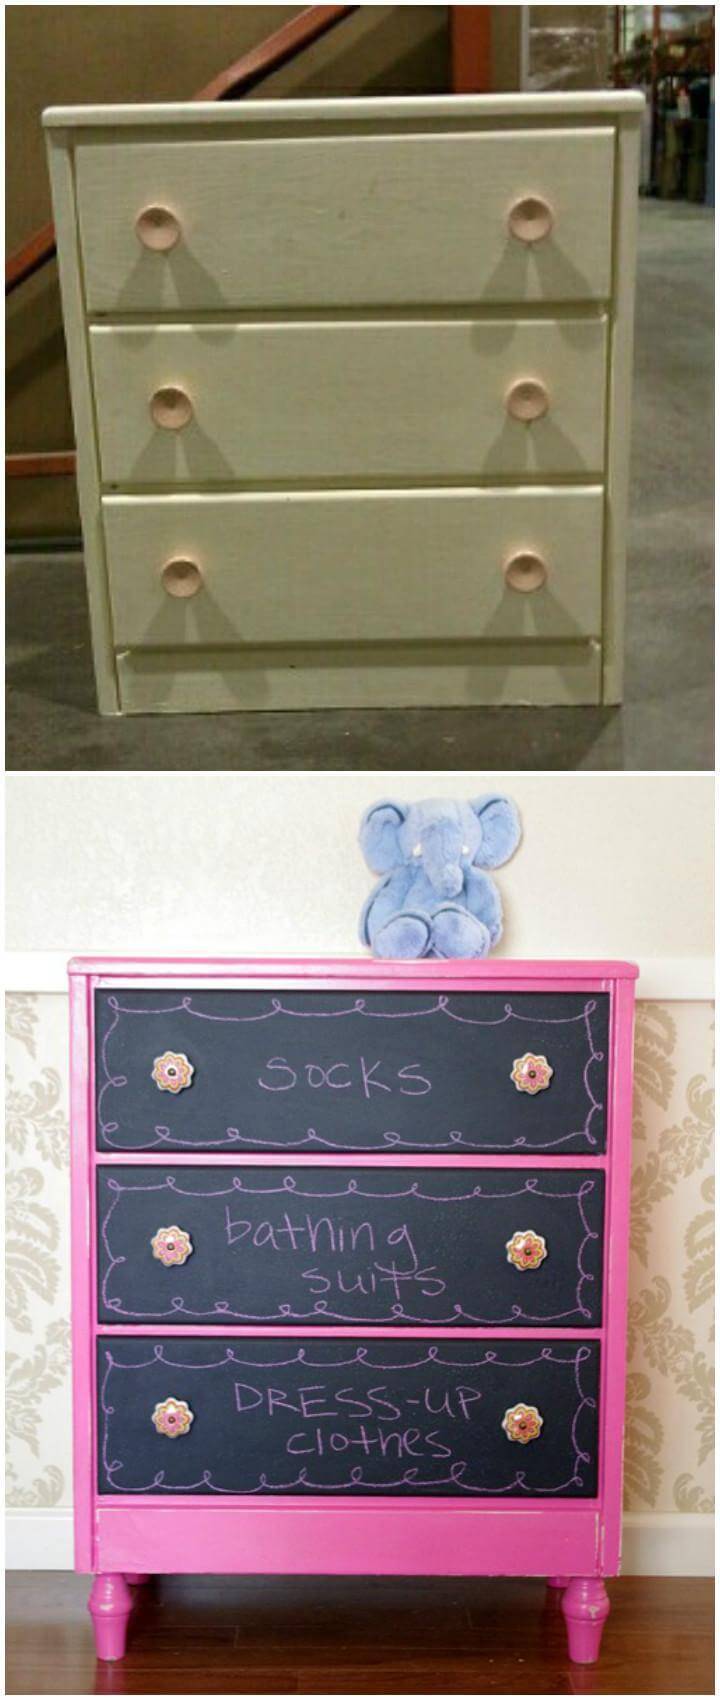 DIY Chalkpainted Dresser - Smart Furniture Transformation